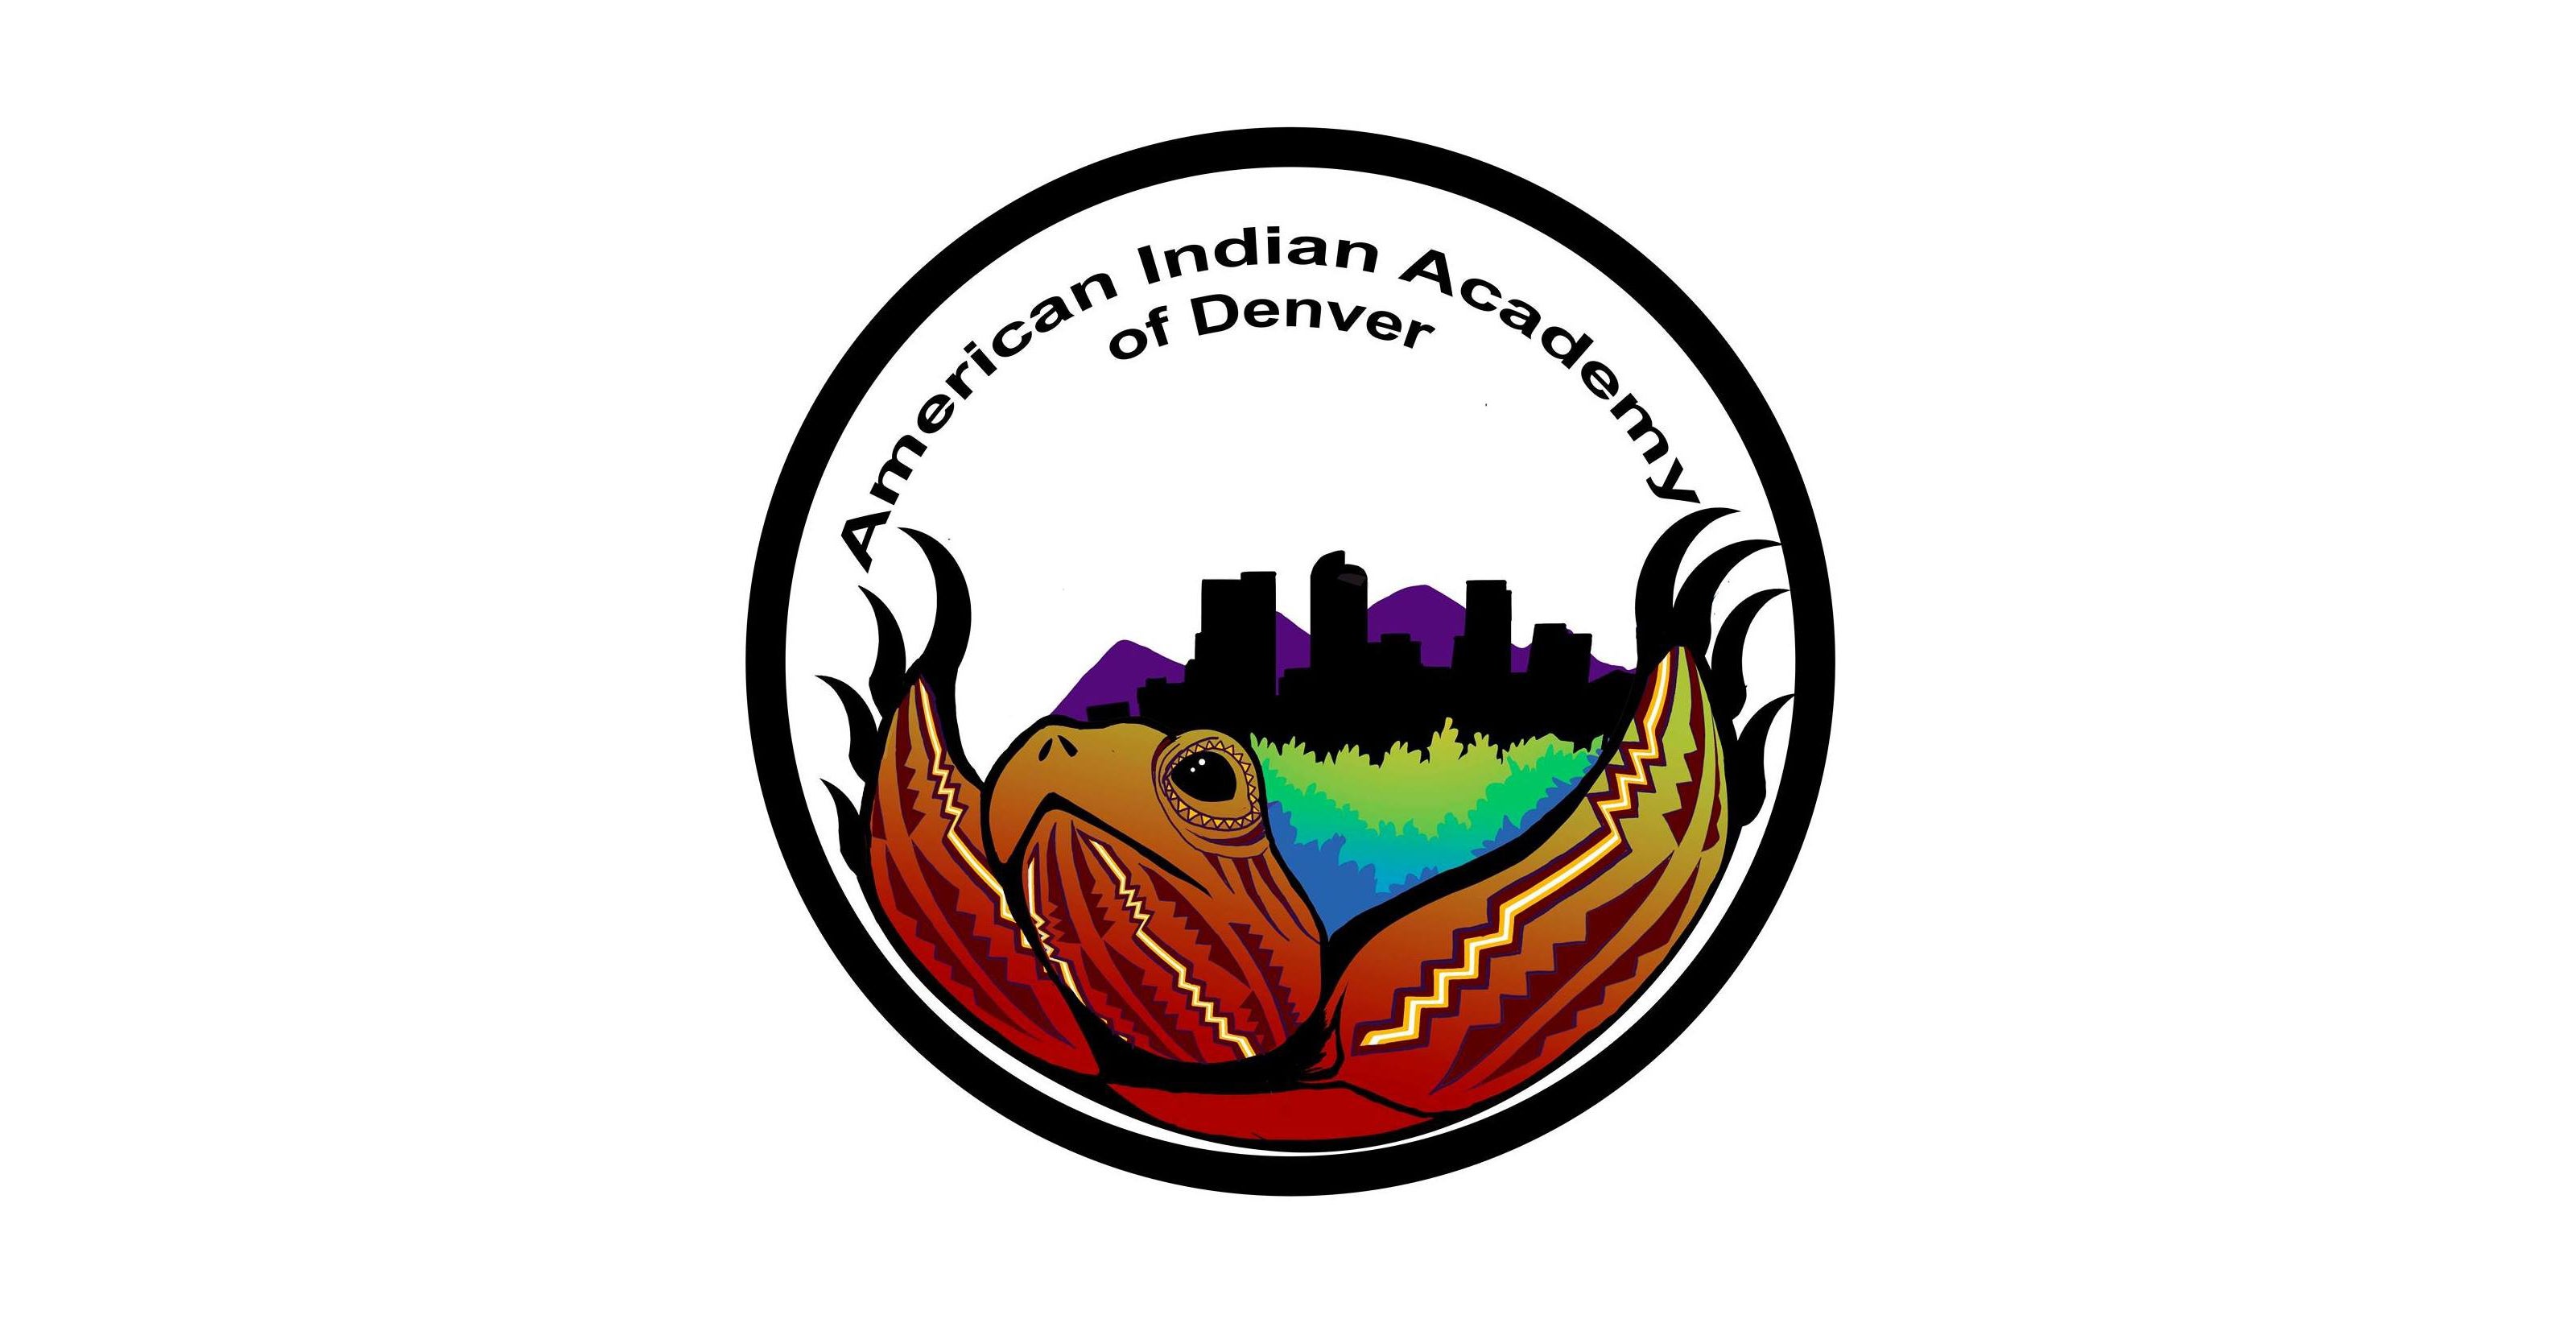 American-Indian-Academy-of-Denver-logo-3200x1638.jpg